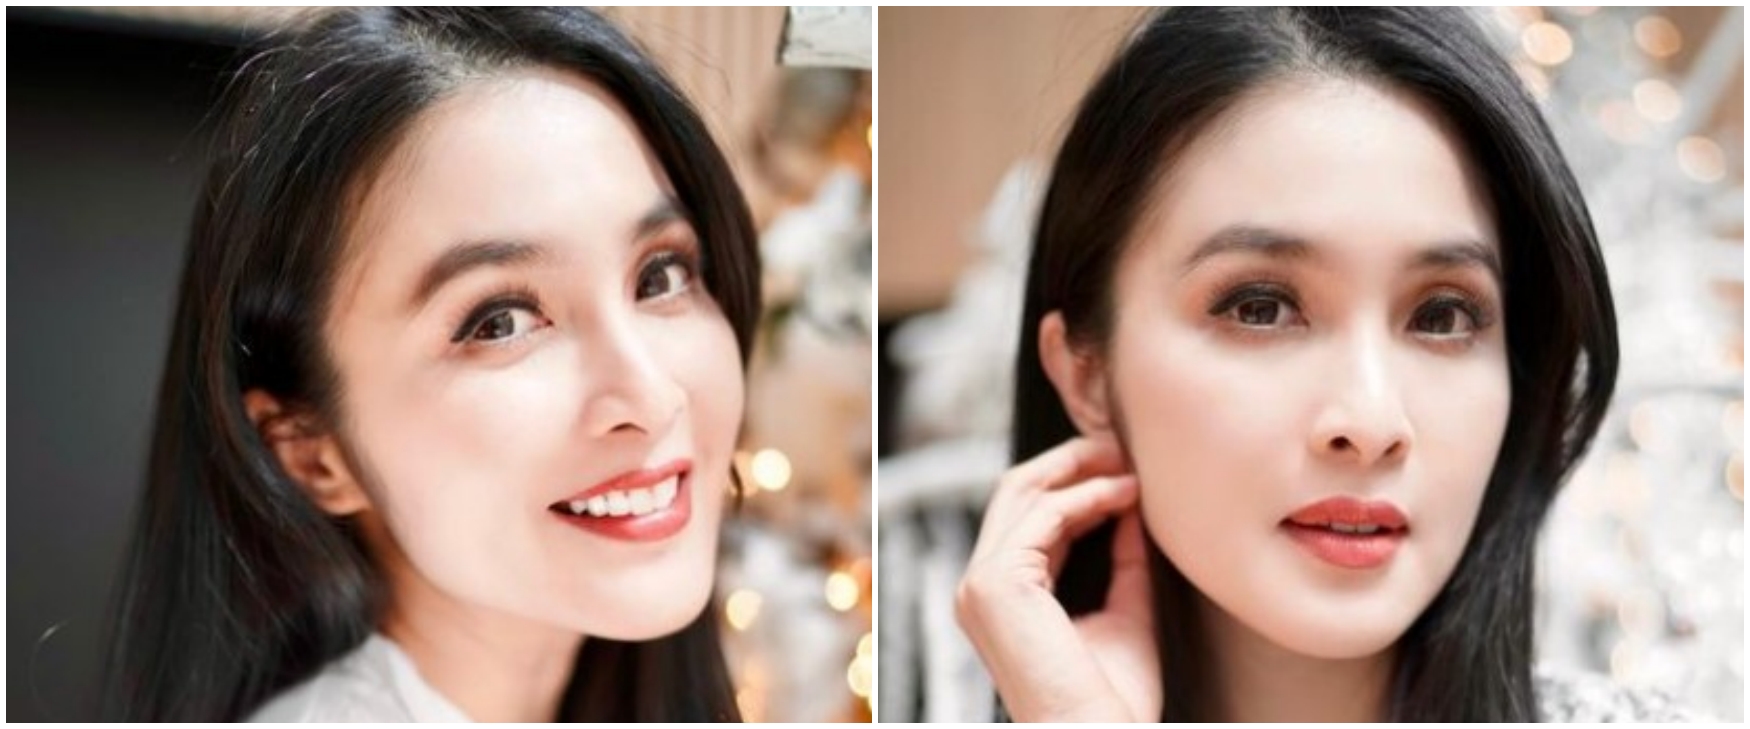 11 Potret Sandra Dewi tampil bare face, tetap terlihat glowing